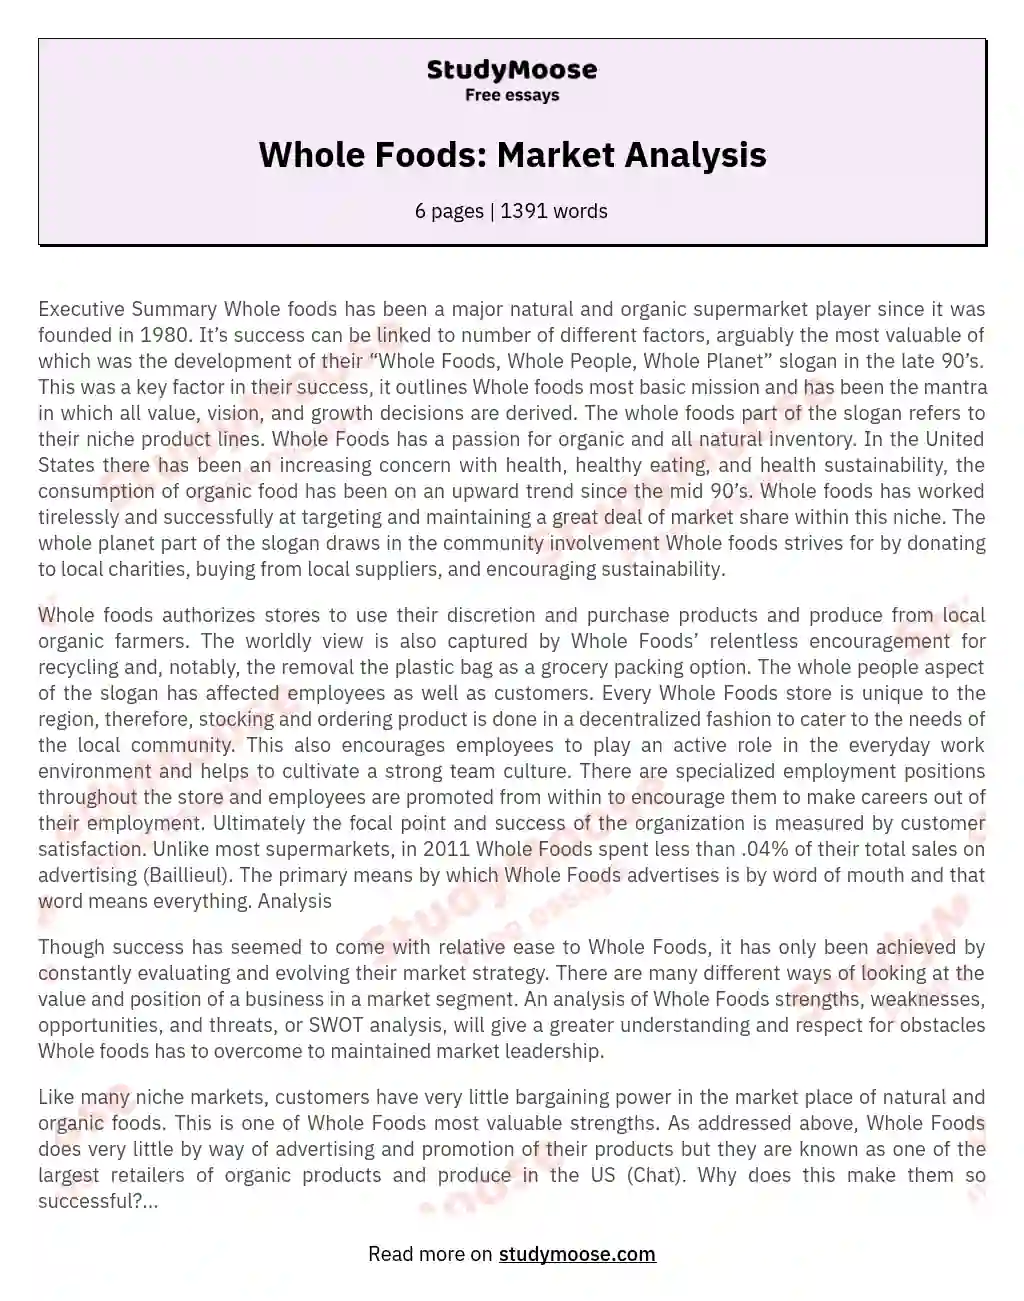 Whole Foods: Market Analysis essay